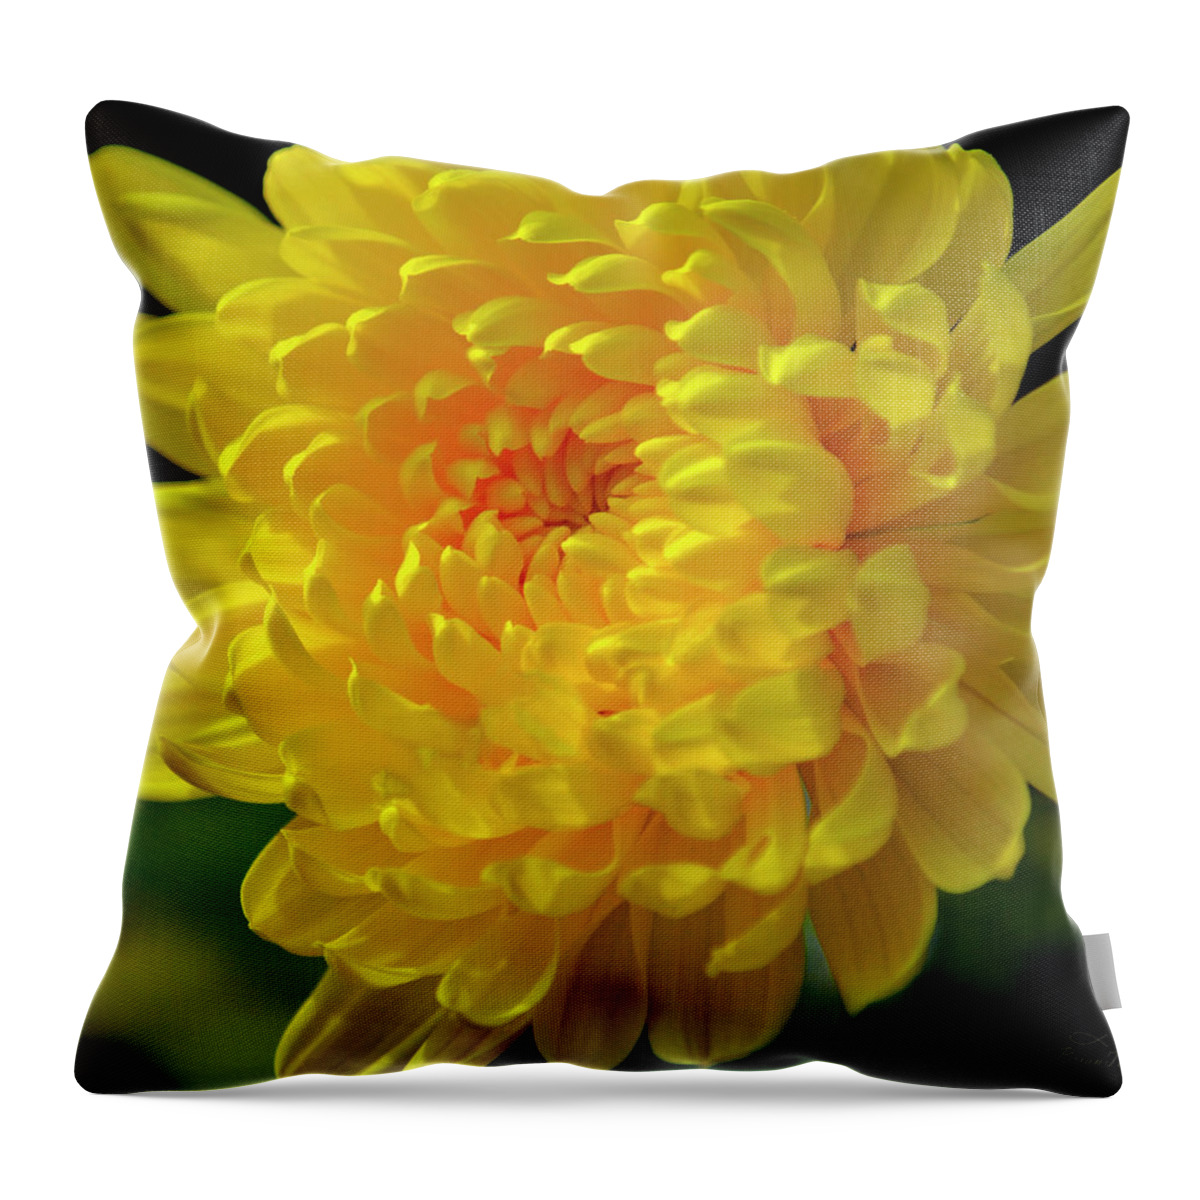 Chrysanthemum Throw Pillow featuring the photograph Golden Chrysanthemum by Brian Tada